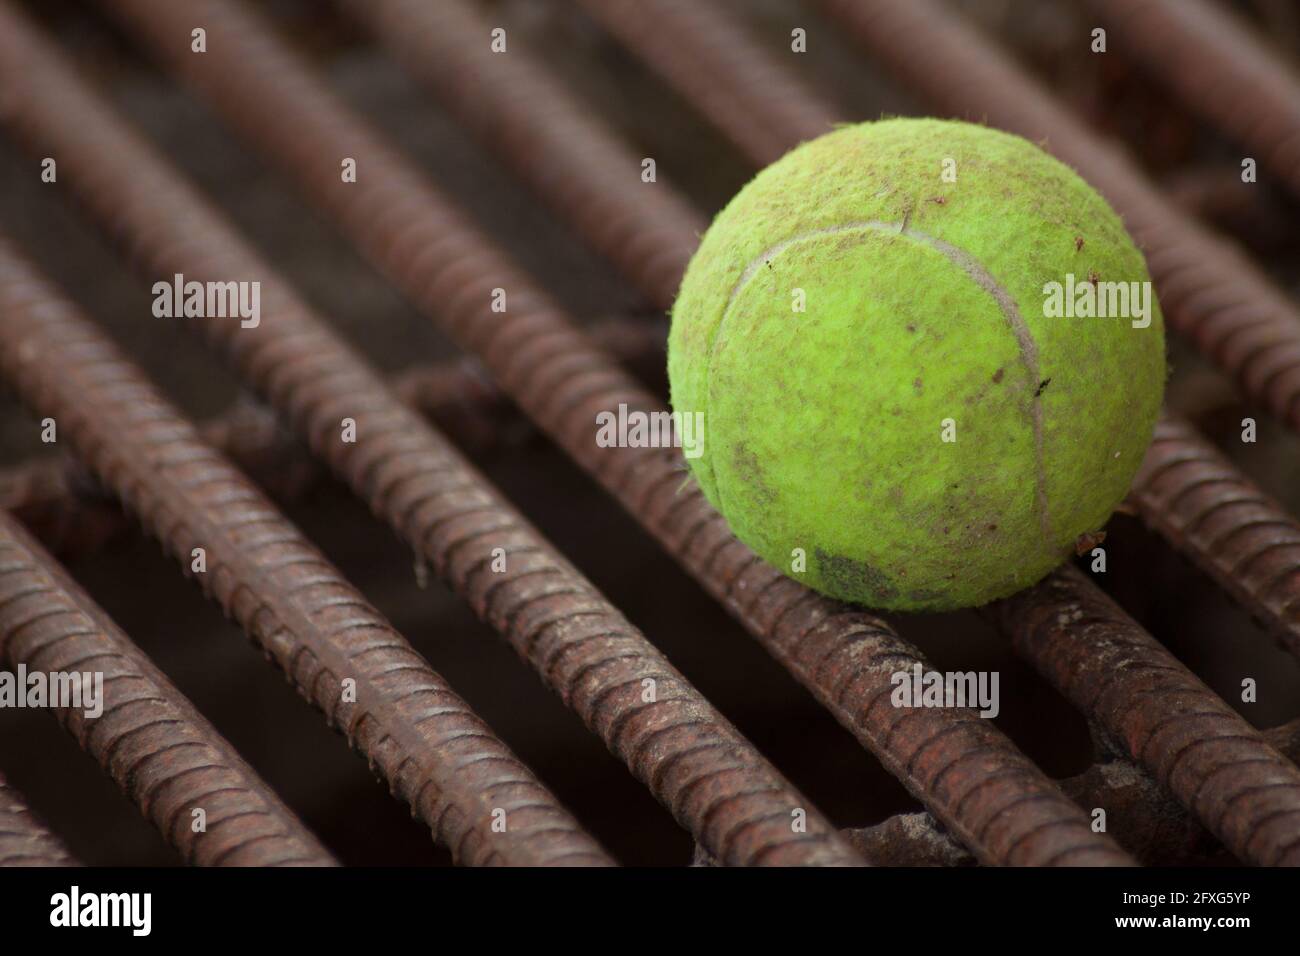 Yellow tennis ball on red iron bars Stock Photo